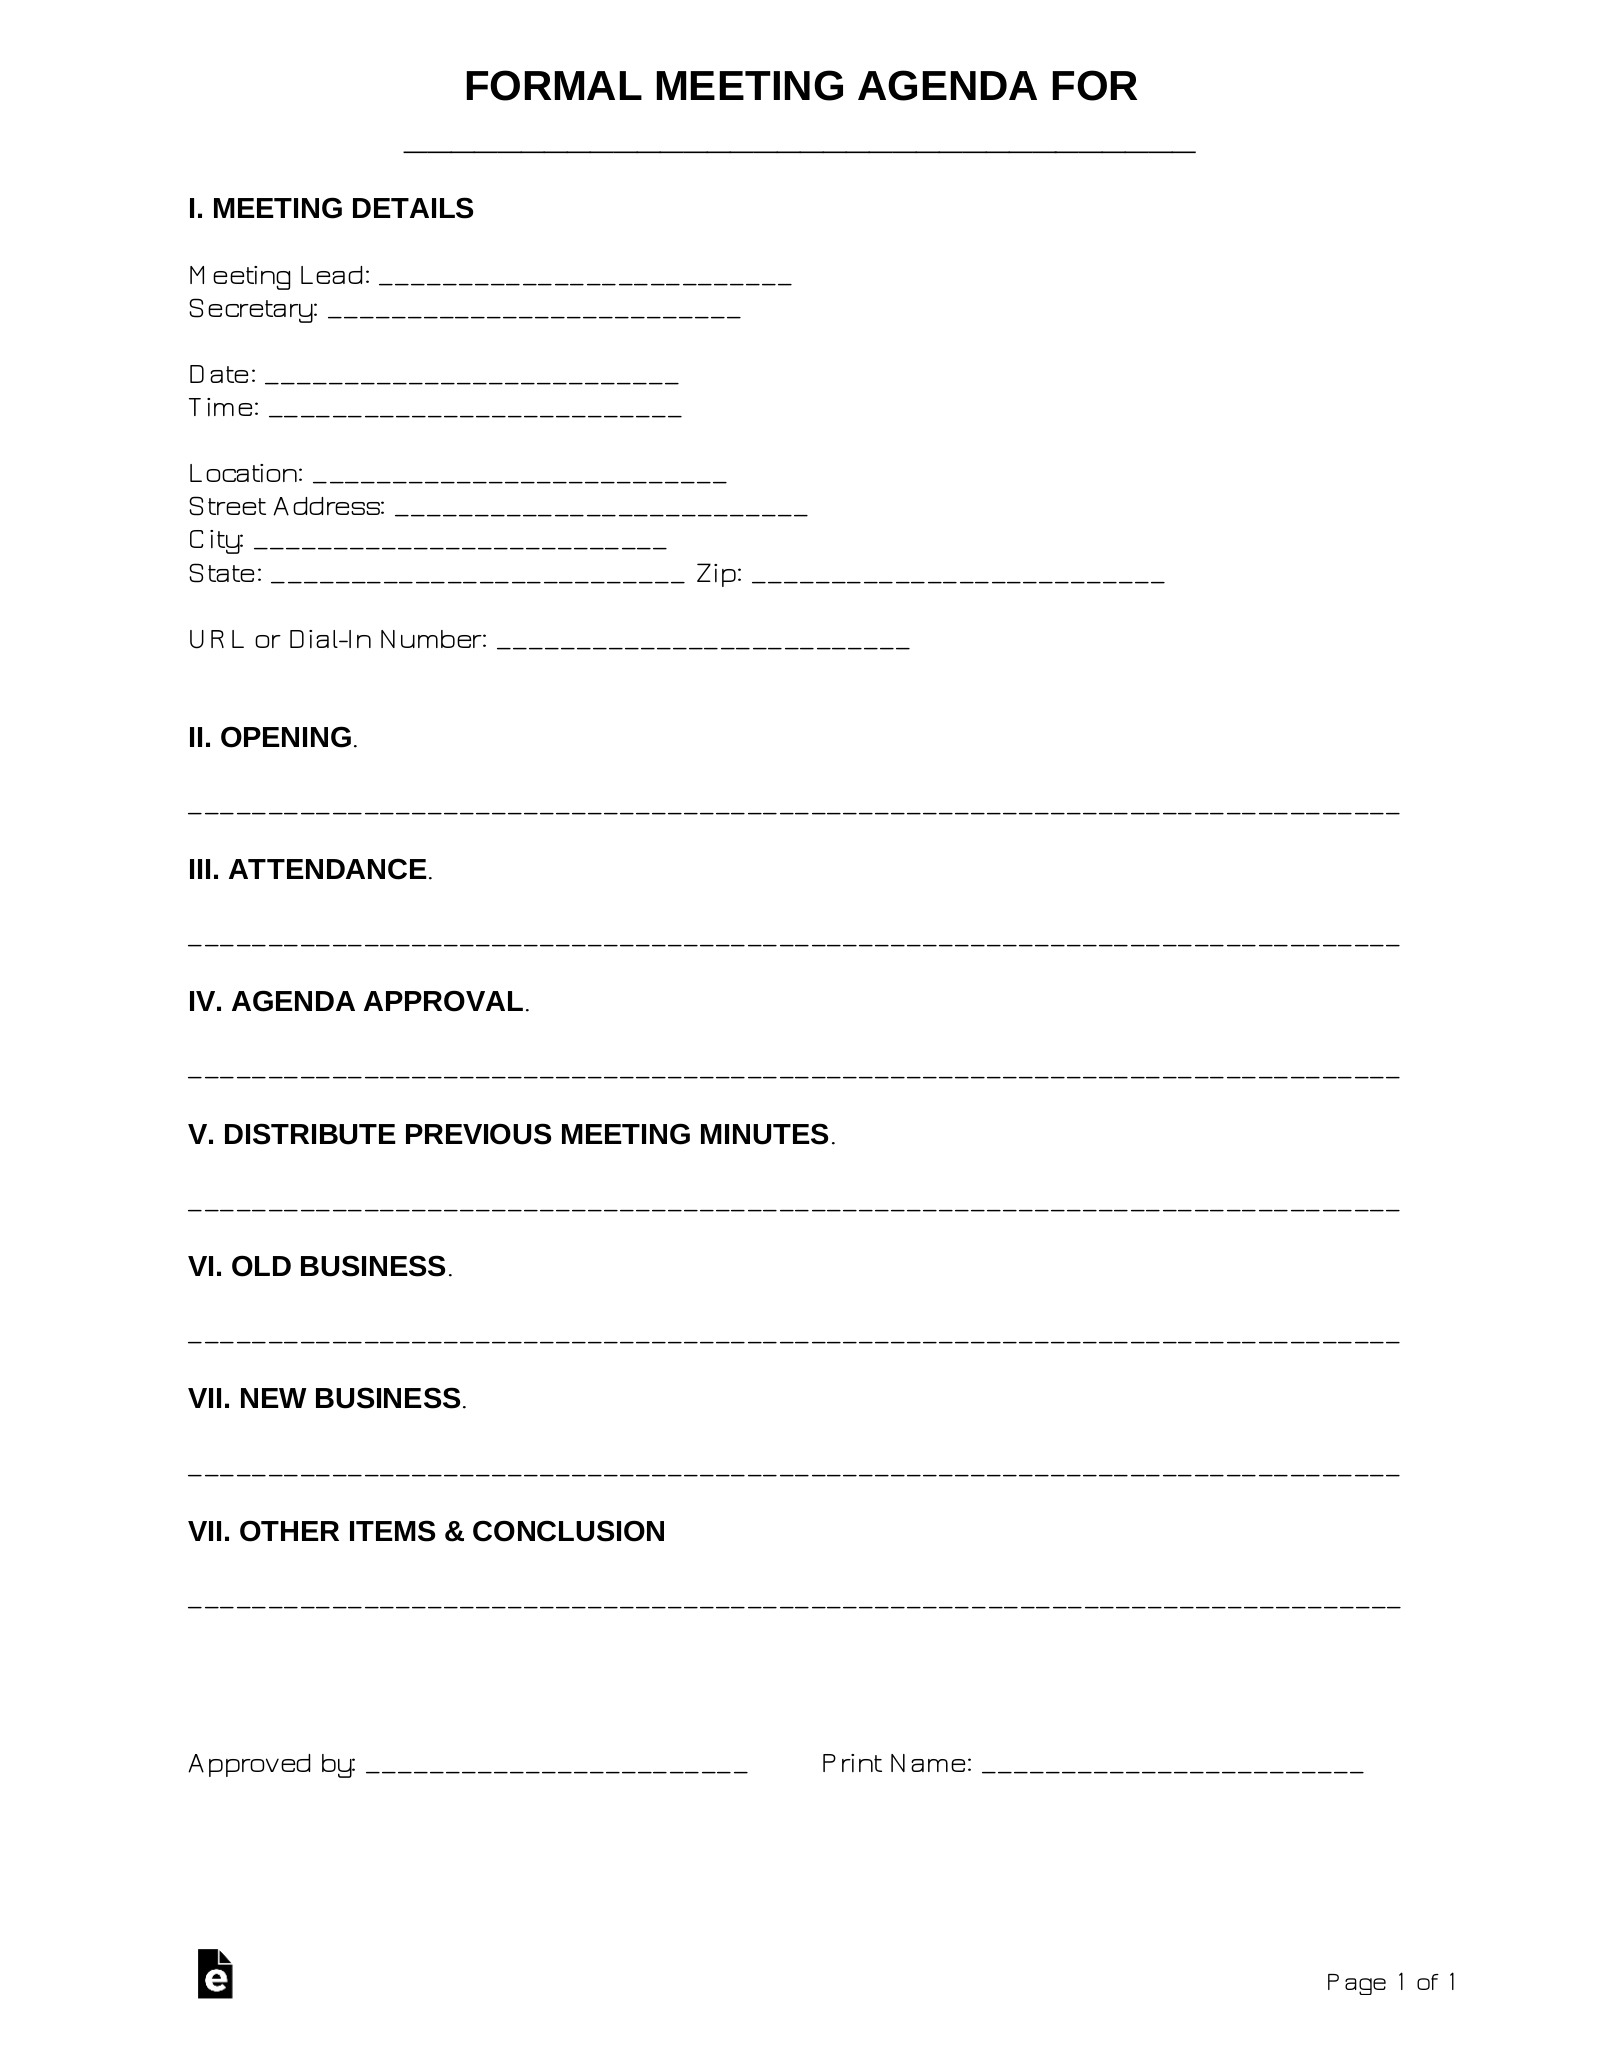 Free Formal Meeting Agenda Template Sample PDF Word eForms